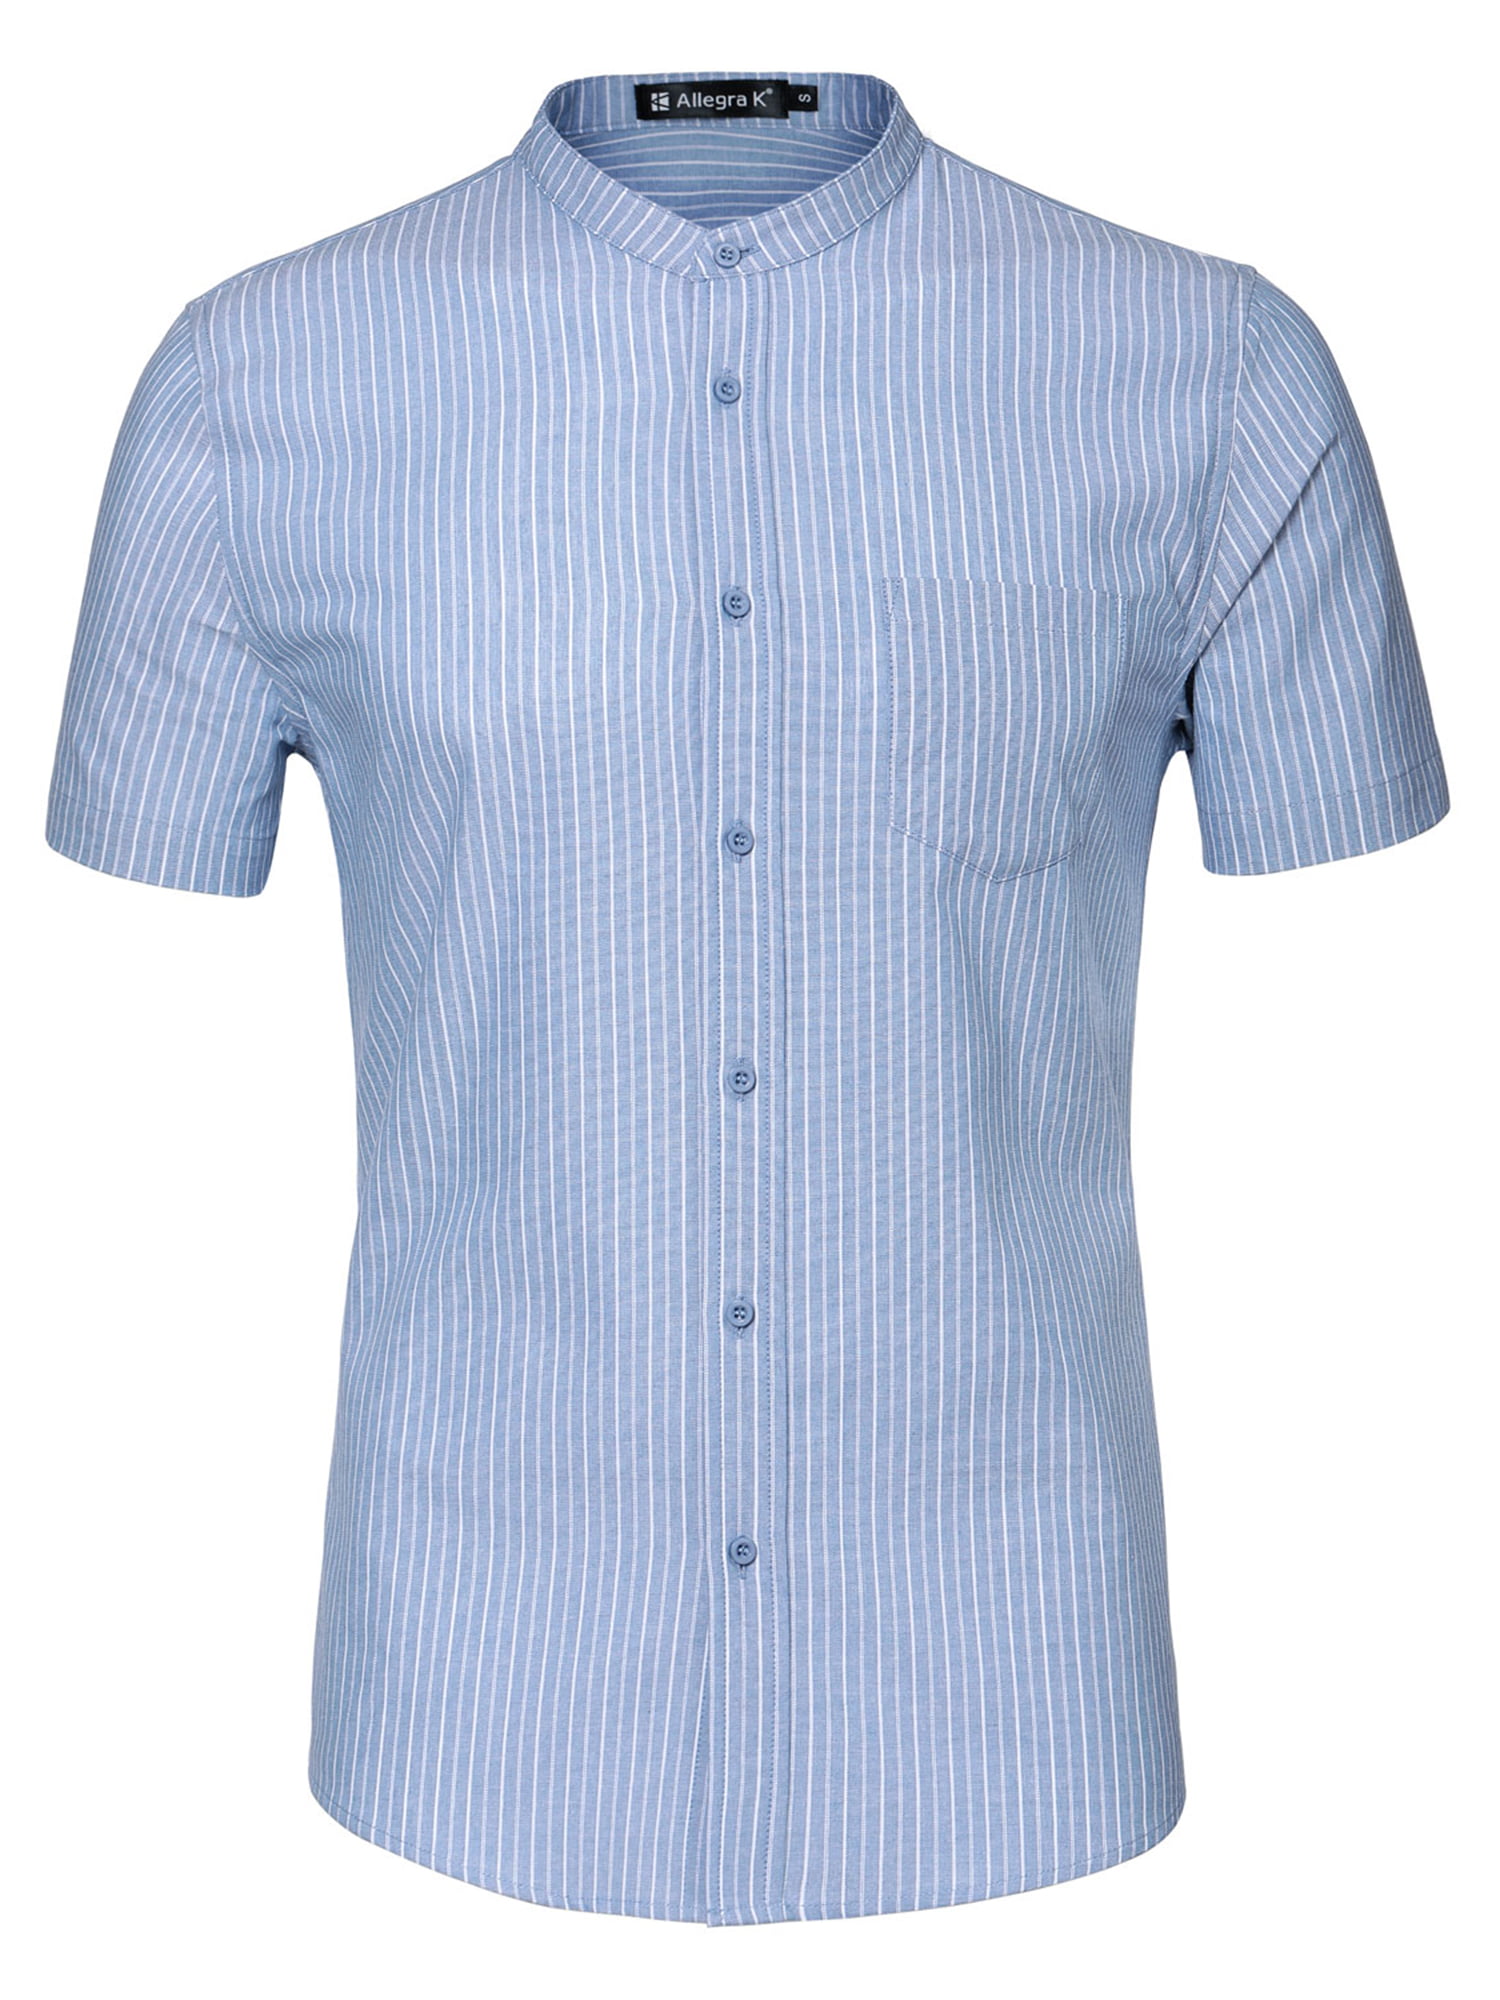 Unique Bargains - Men's Stripe Collarless Short Sleeves Button Shirt ...